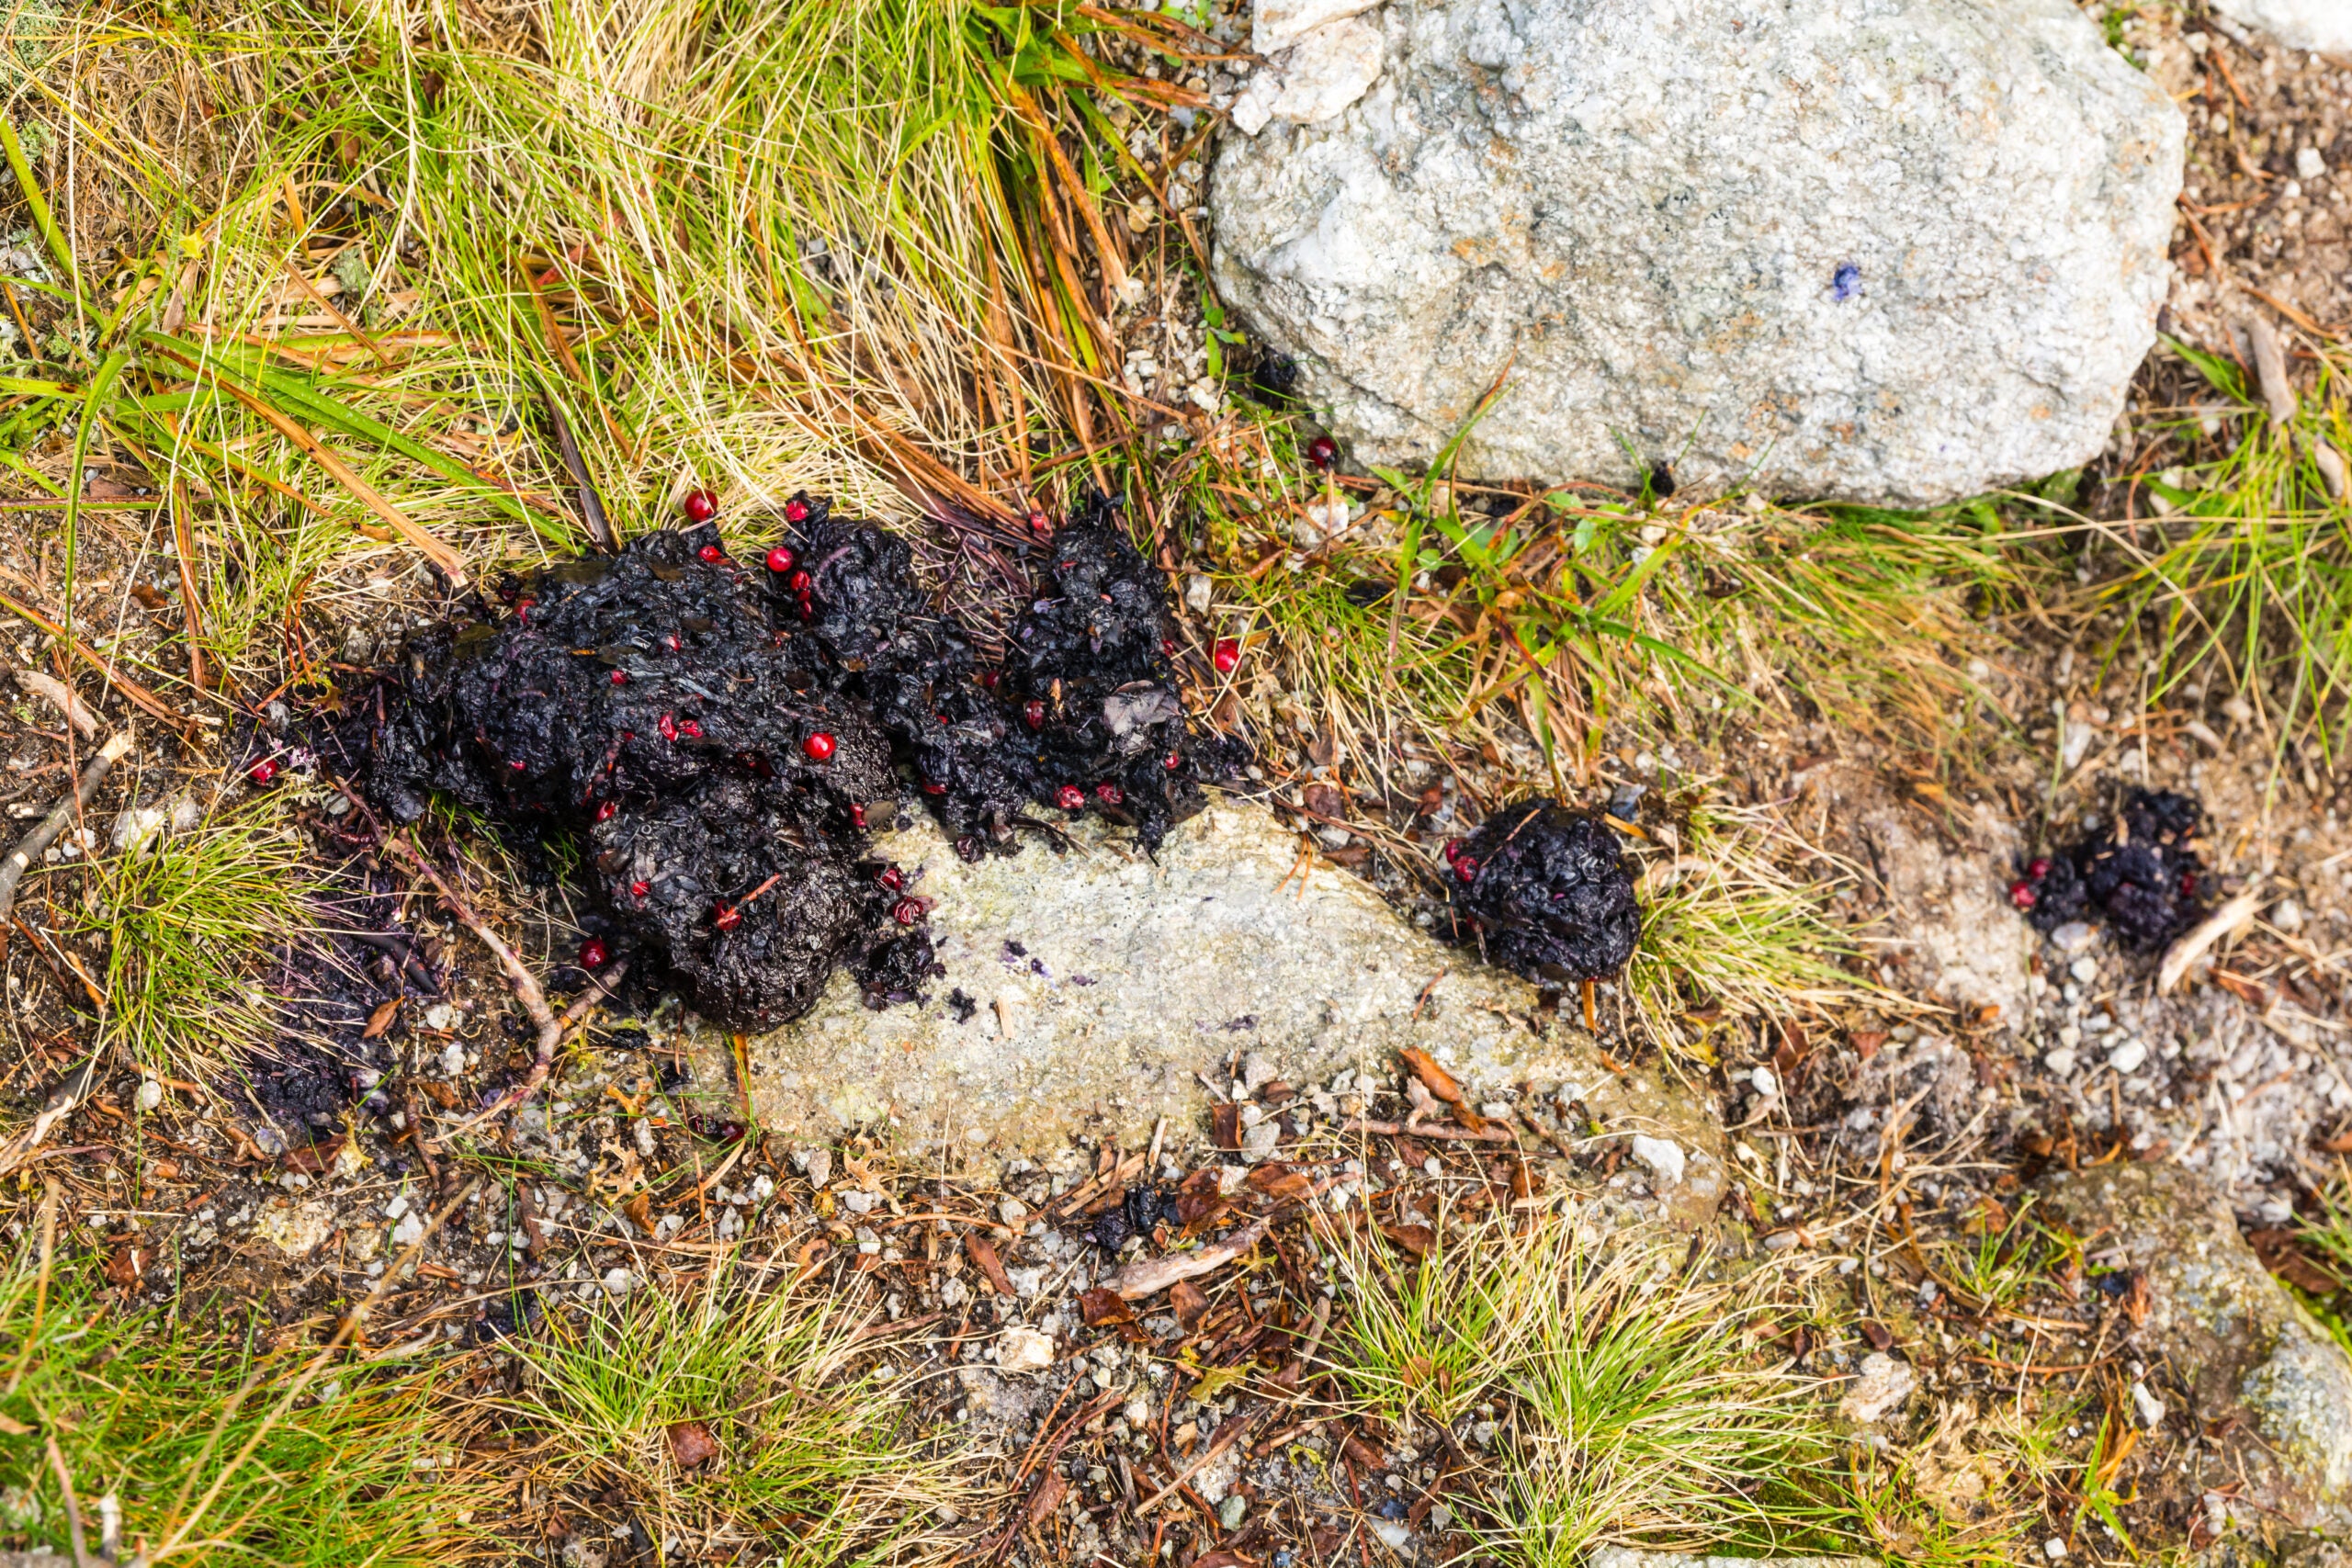 Photo of bear poop near a feeding territory